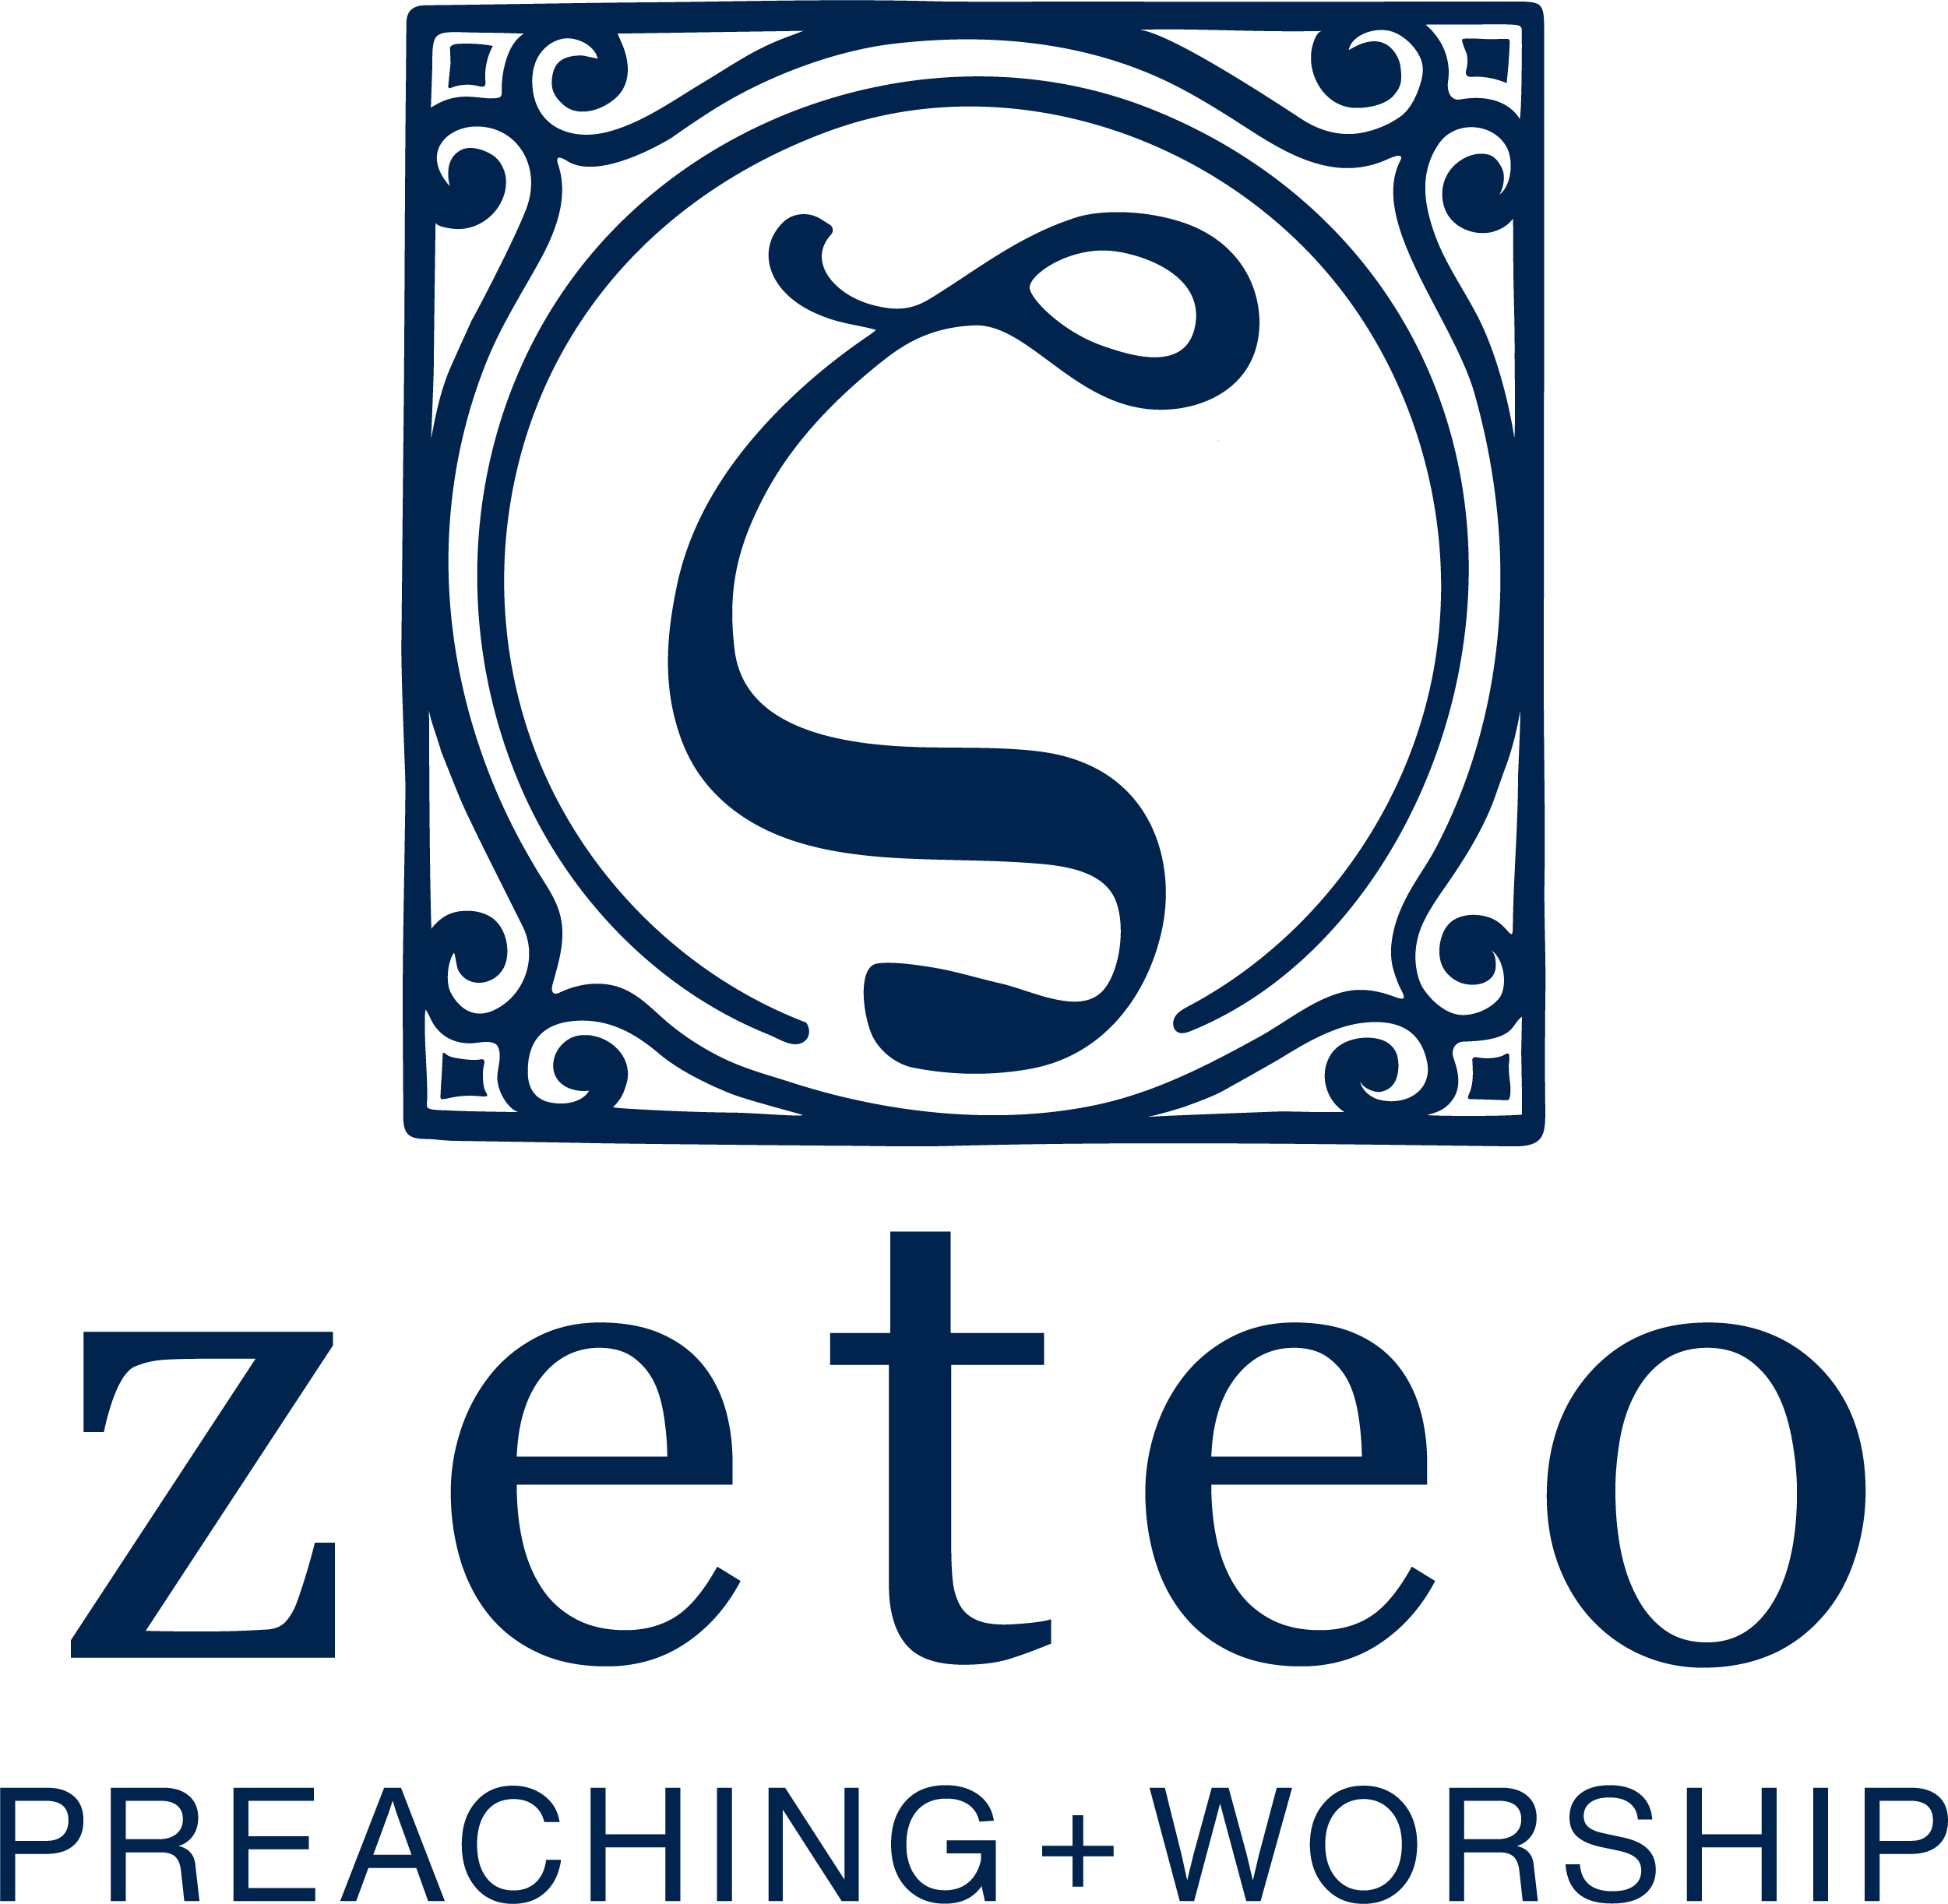 Zeteo Preaching + Worship